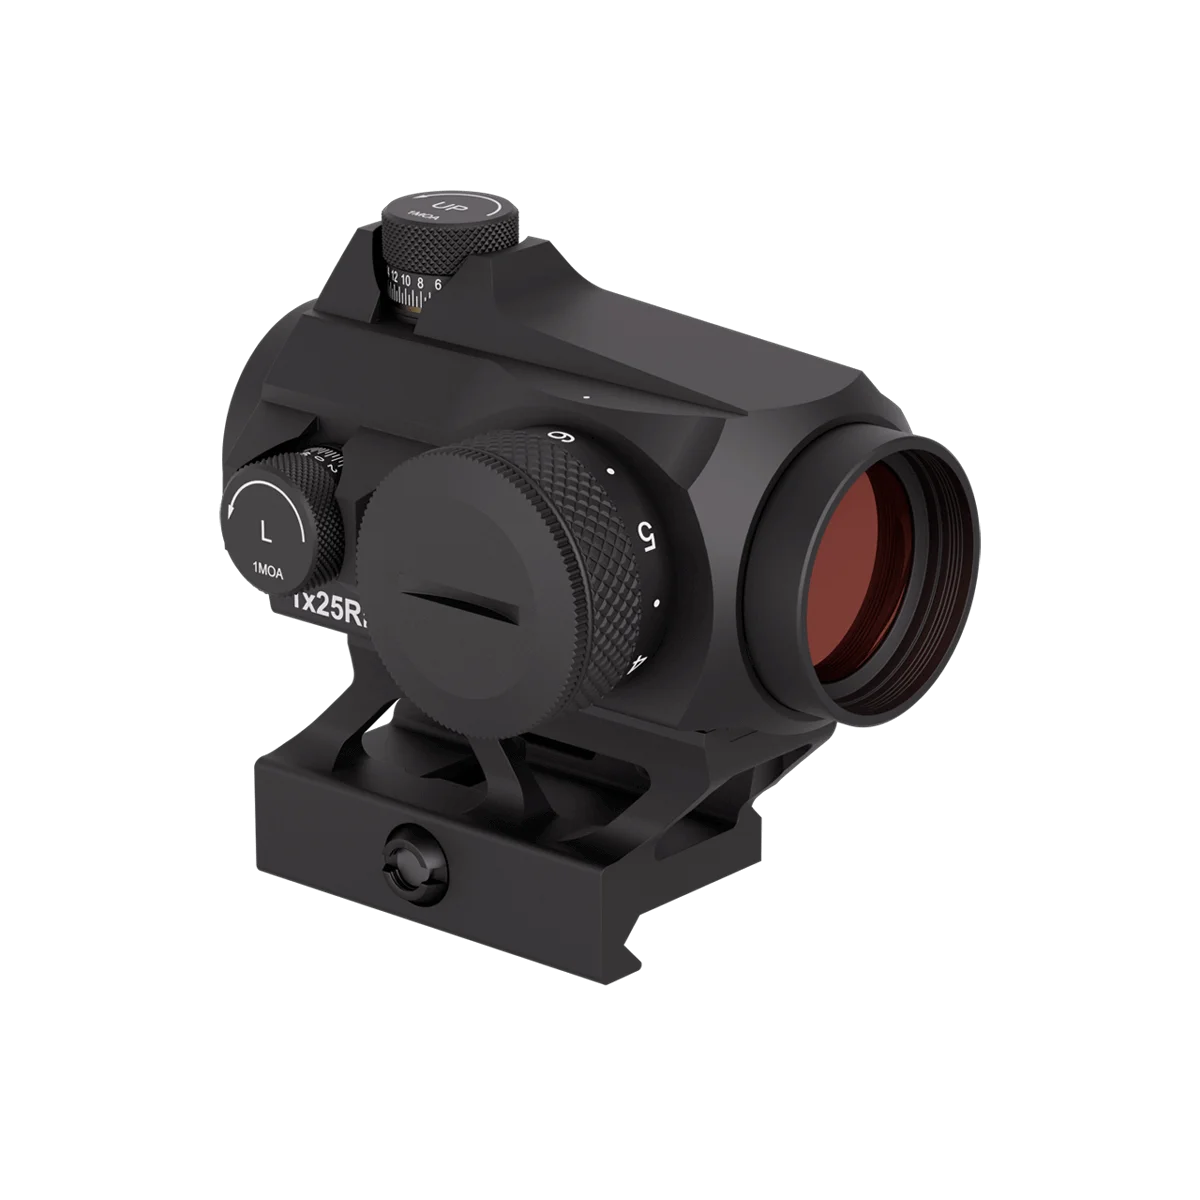 Vector Optics Maverick-II 1x25 GenII Red Dot Sight With Motion Sensor Feature For AR15 AK .223 .308 12GA Tactics Hunting